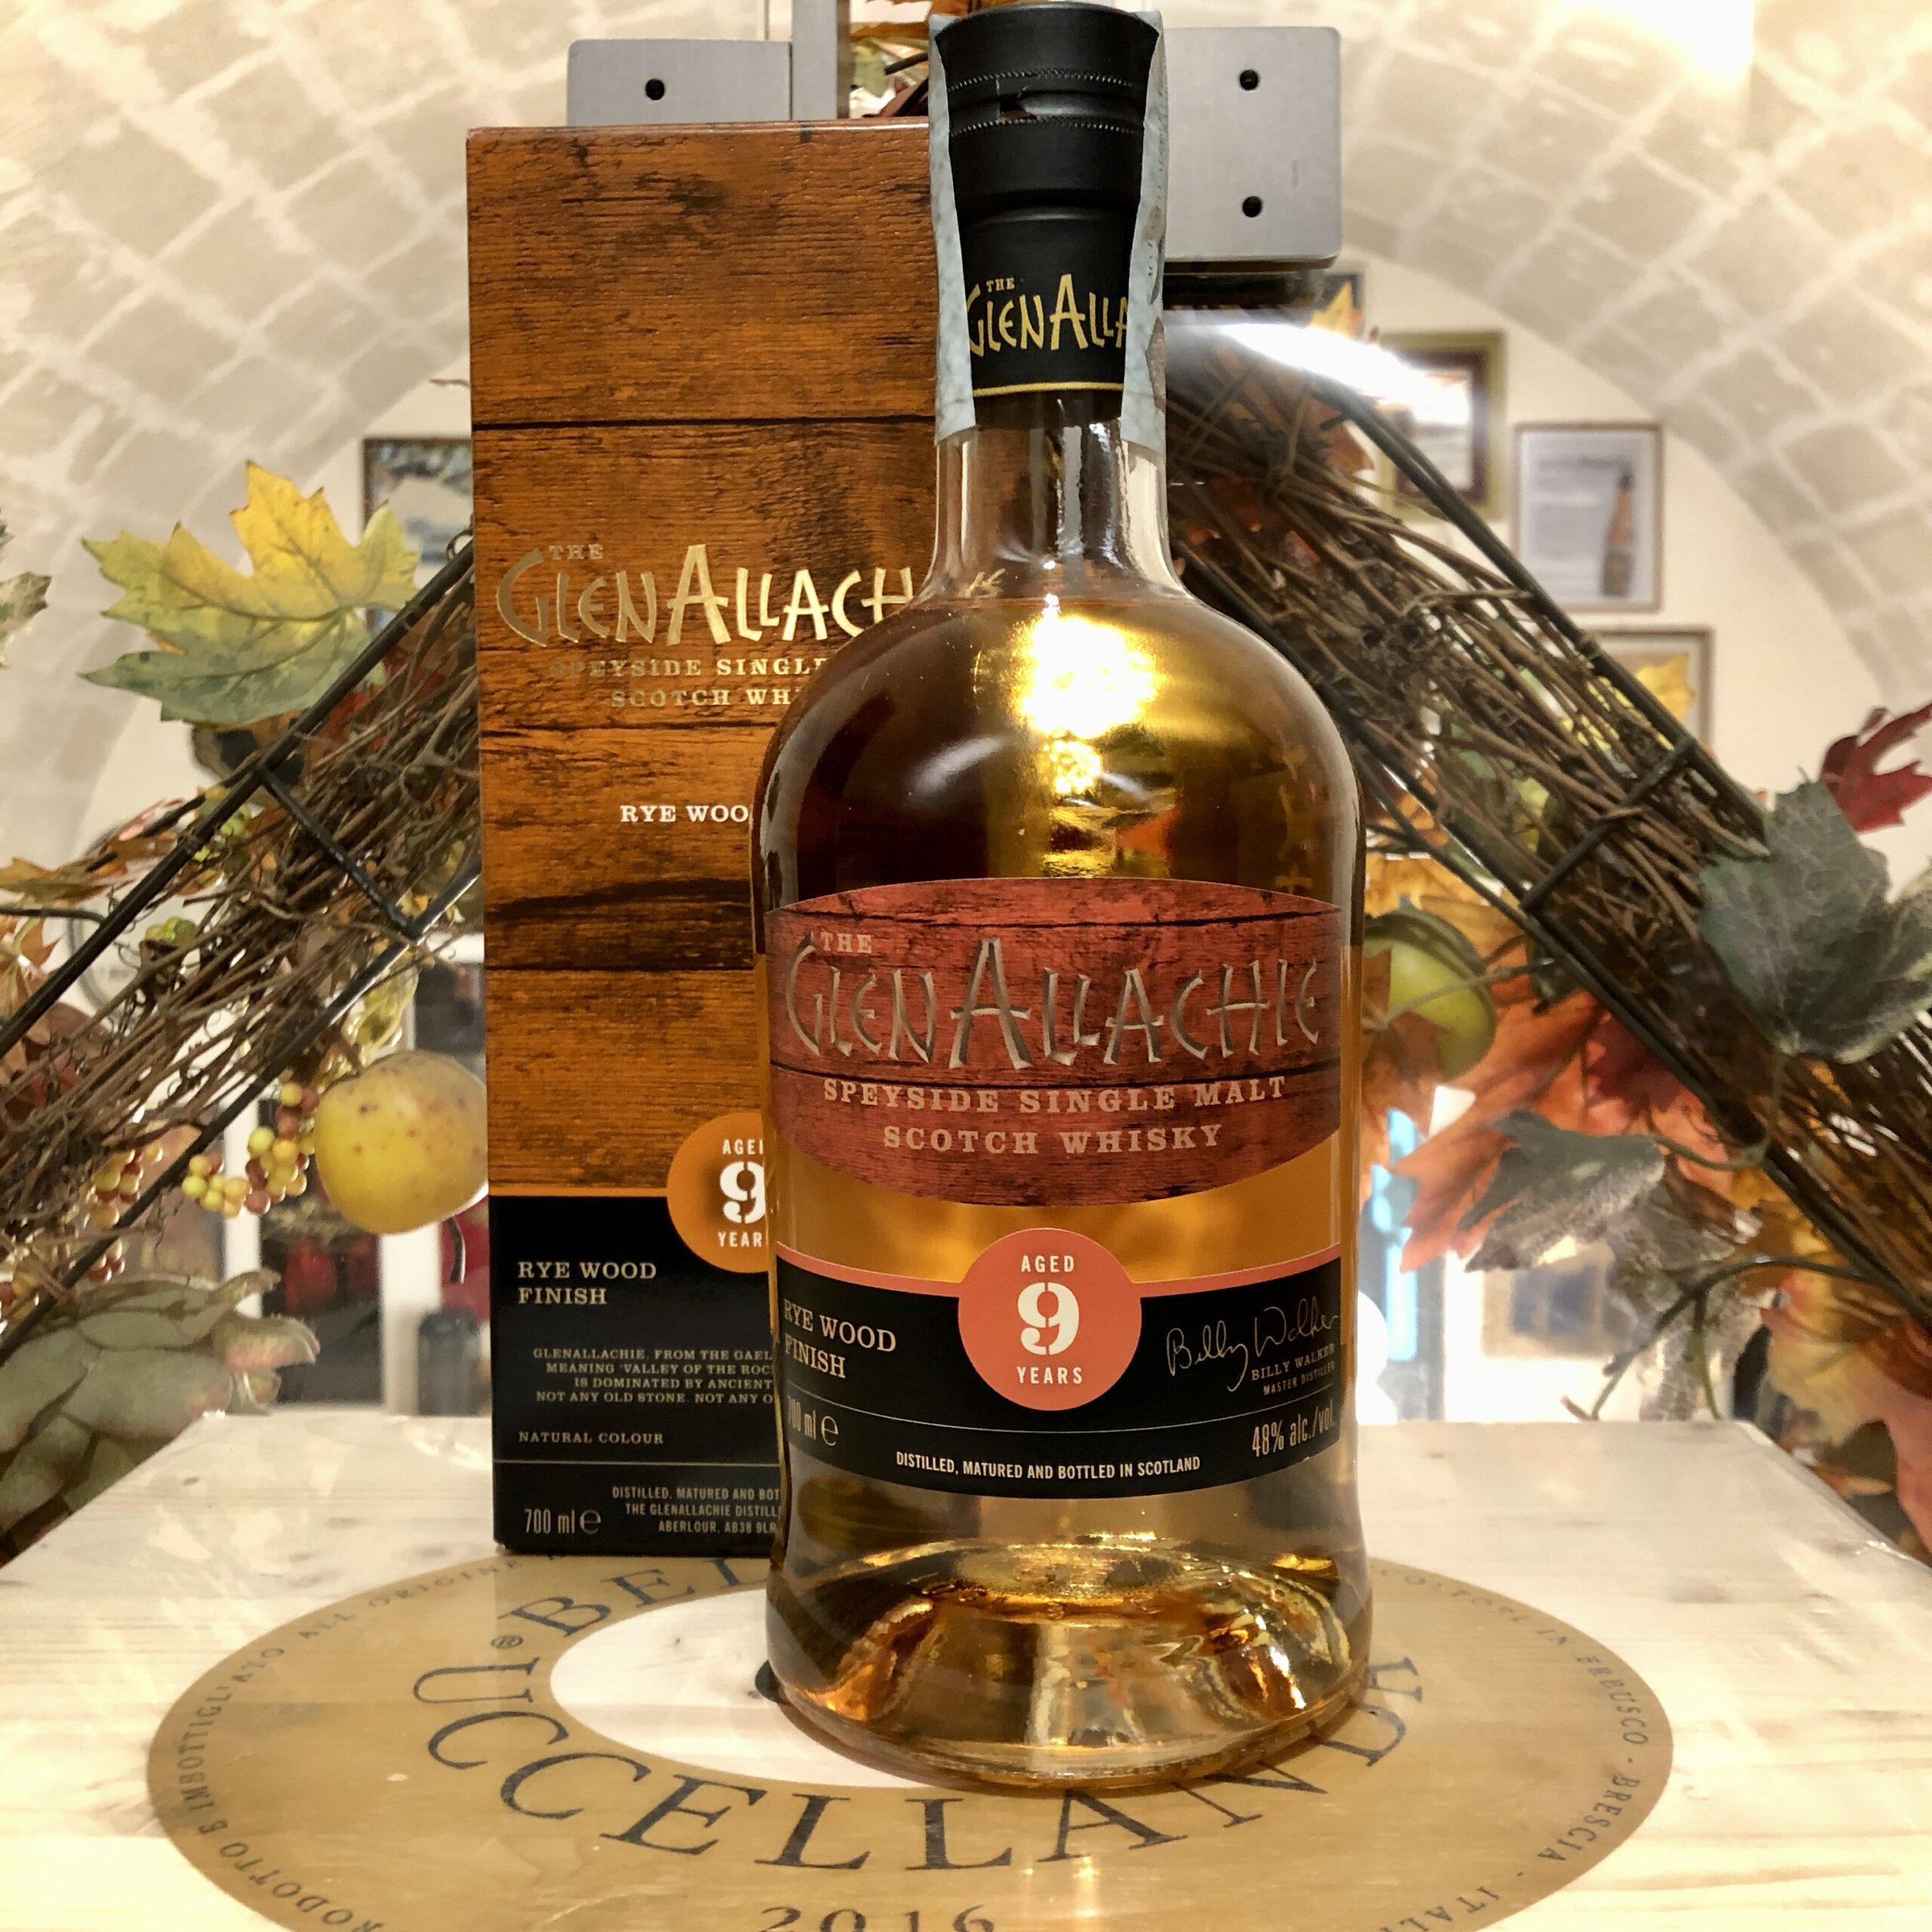 The GlenAllachie Speyside Single Malt Scotch Whisky 9 YO Rye Wood Finish